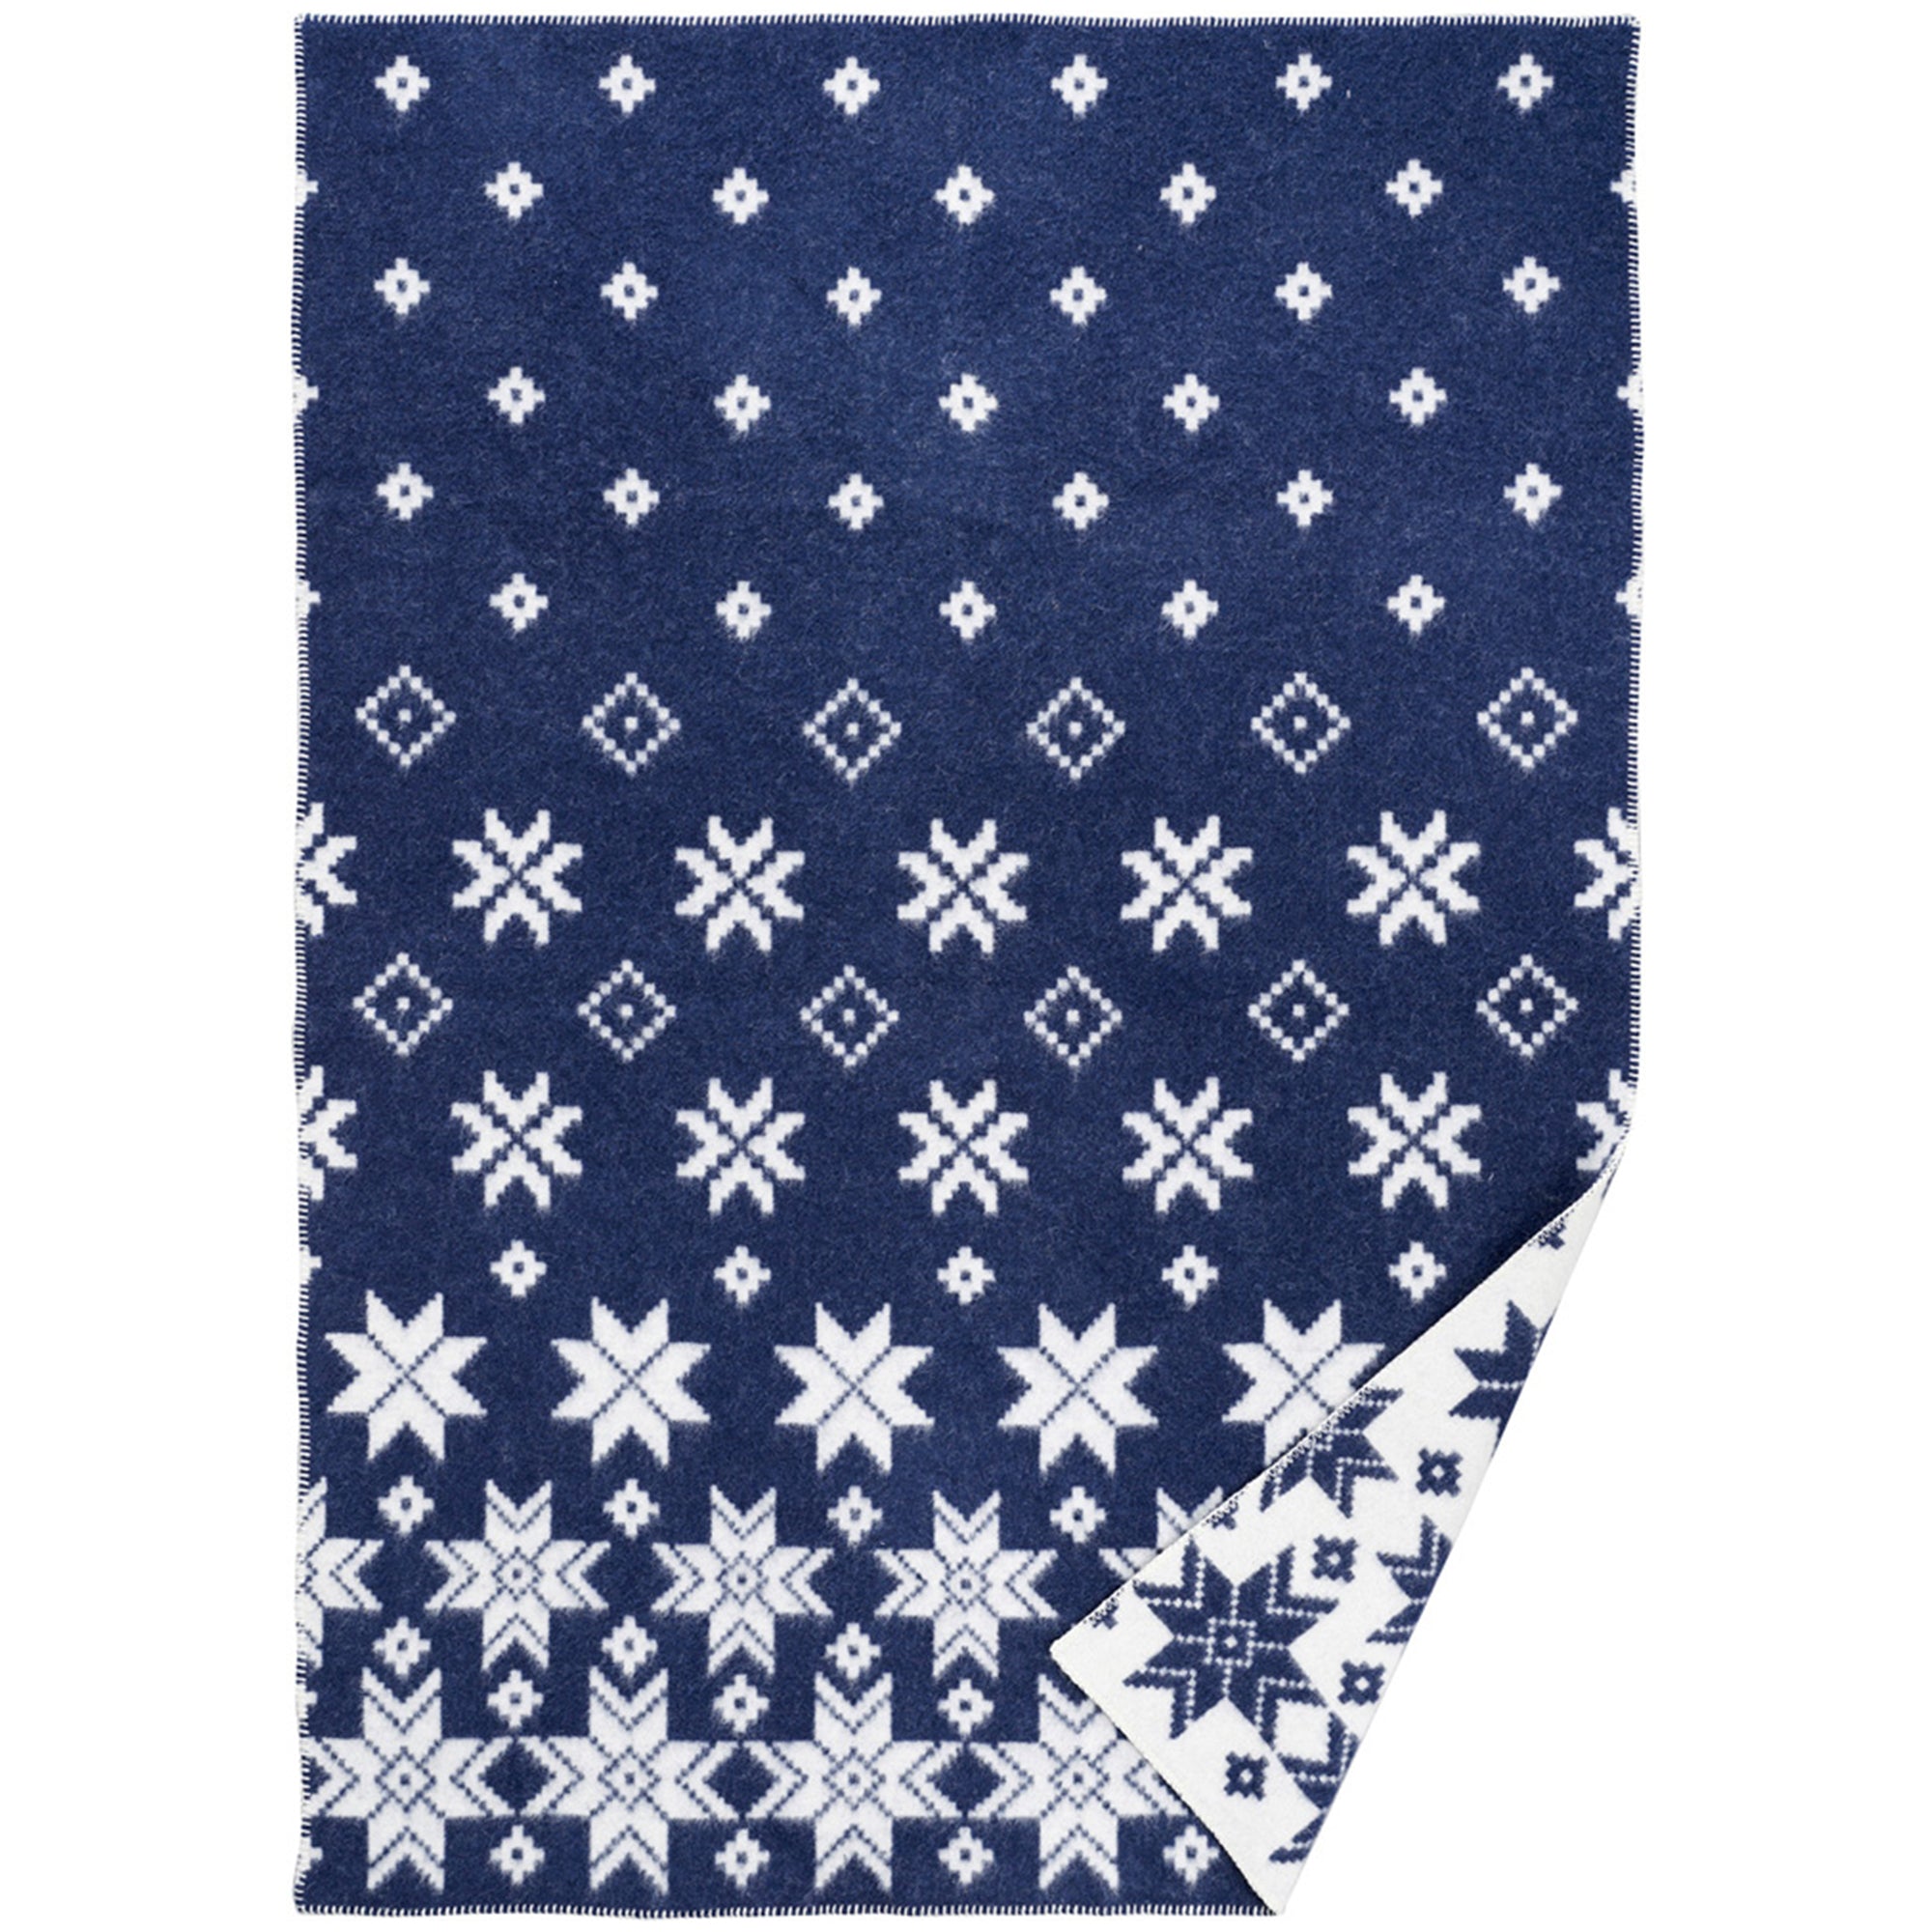 Snowfall Blue 130x180cm Woven Lambswool Blanket